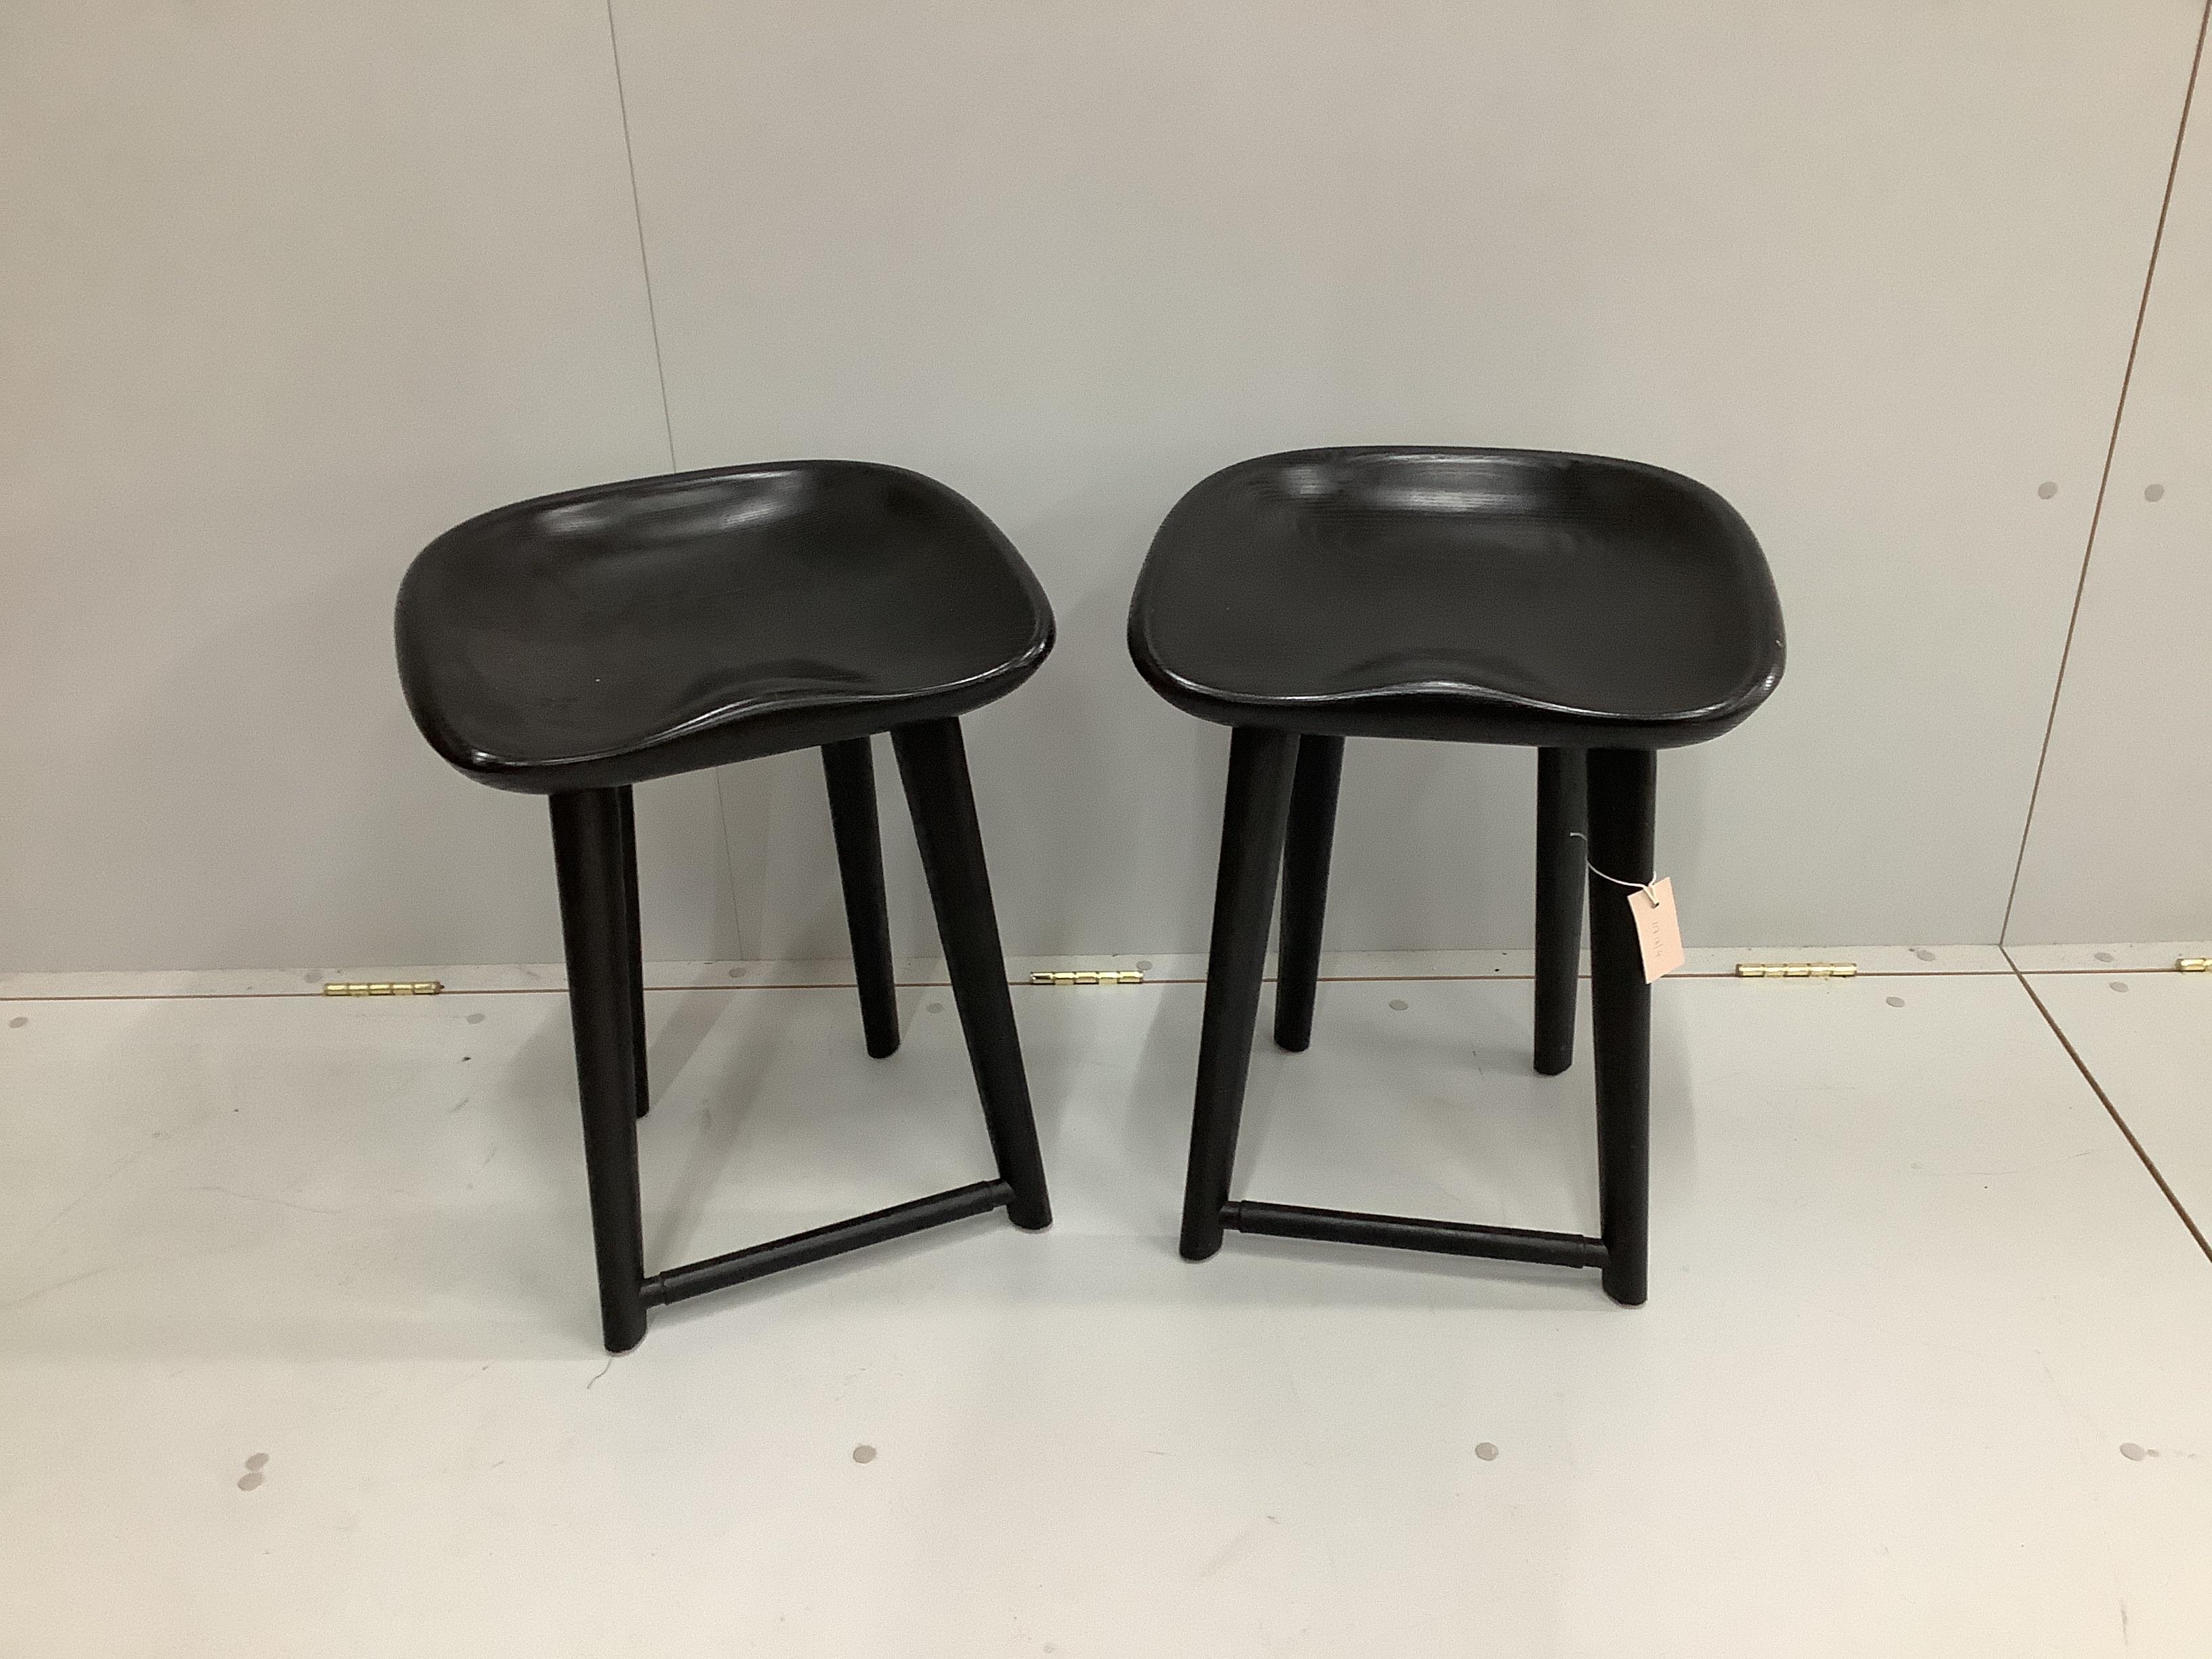 A pair of Craig Bassam and Scott Fellows black lacquer ash stools, width 43cm, depth 34cm, height 56cm